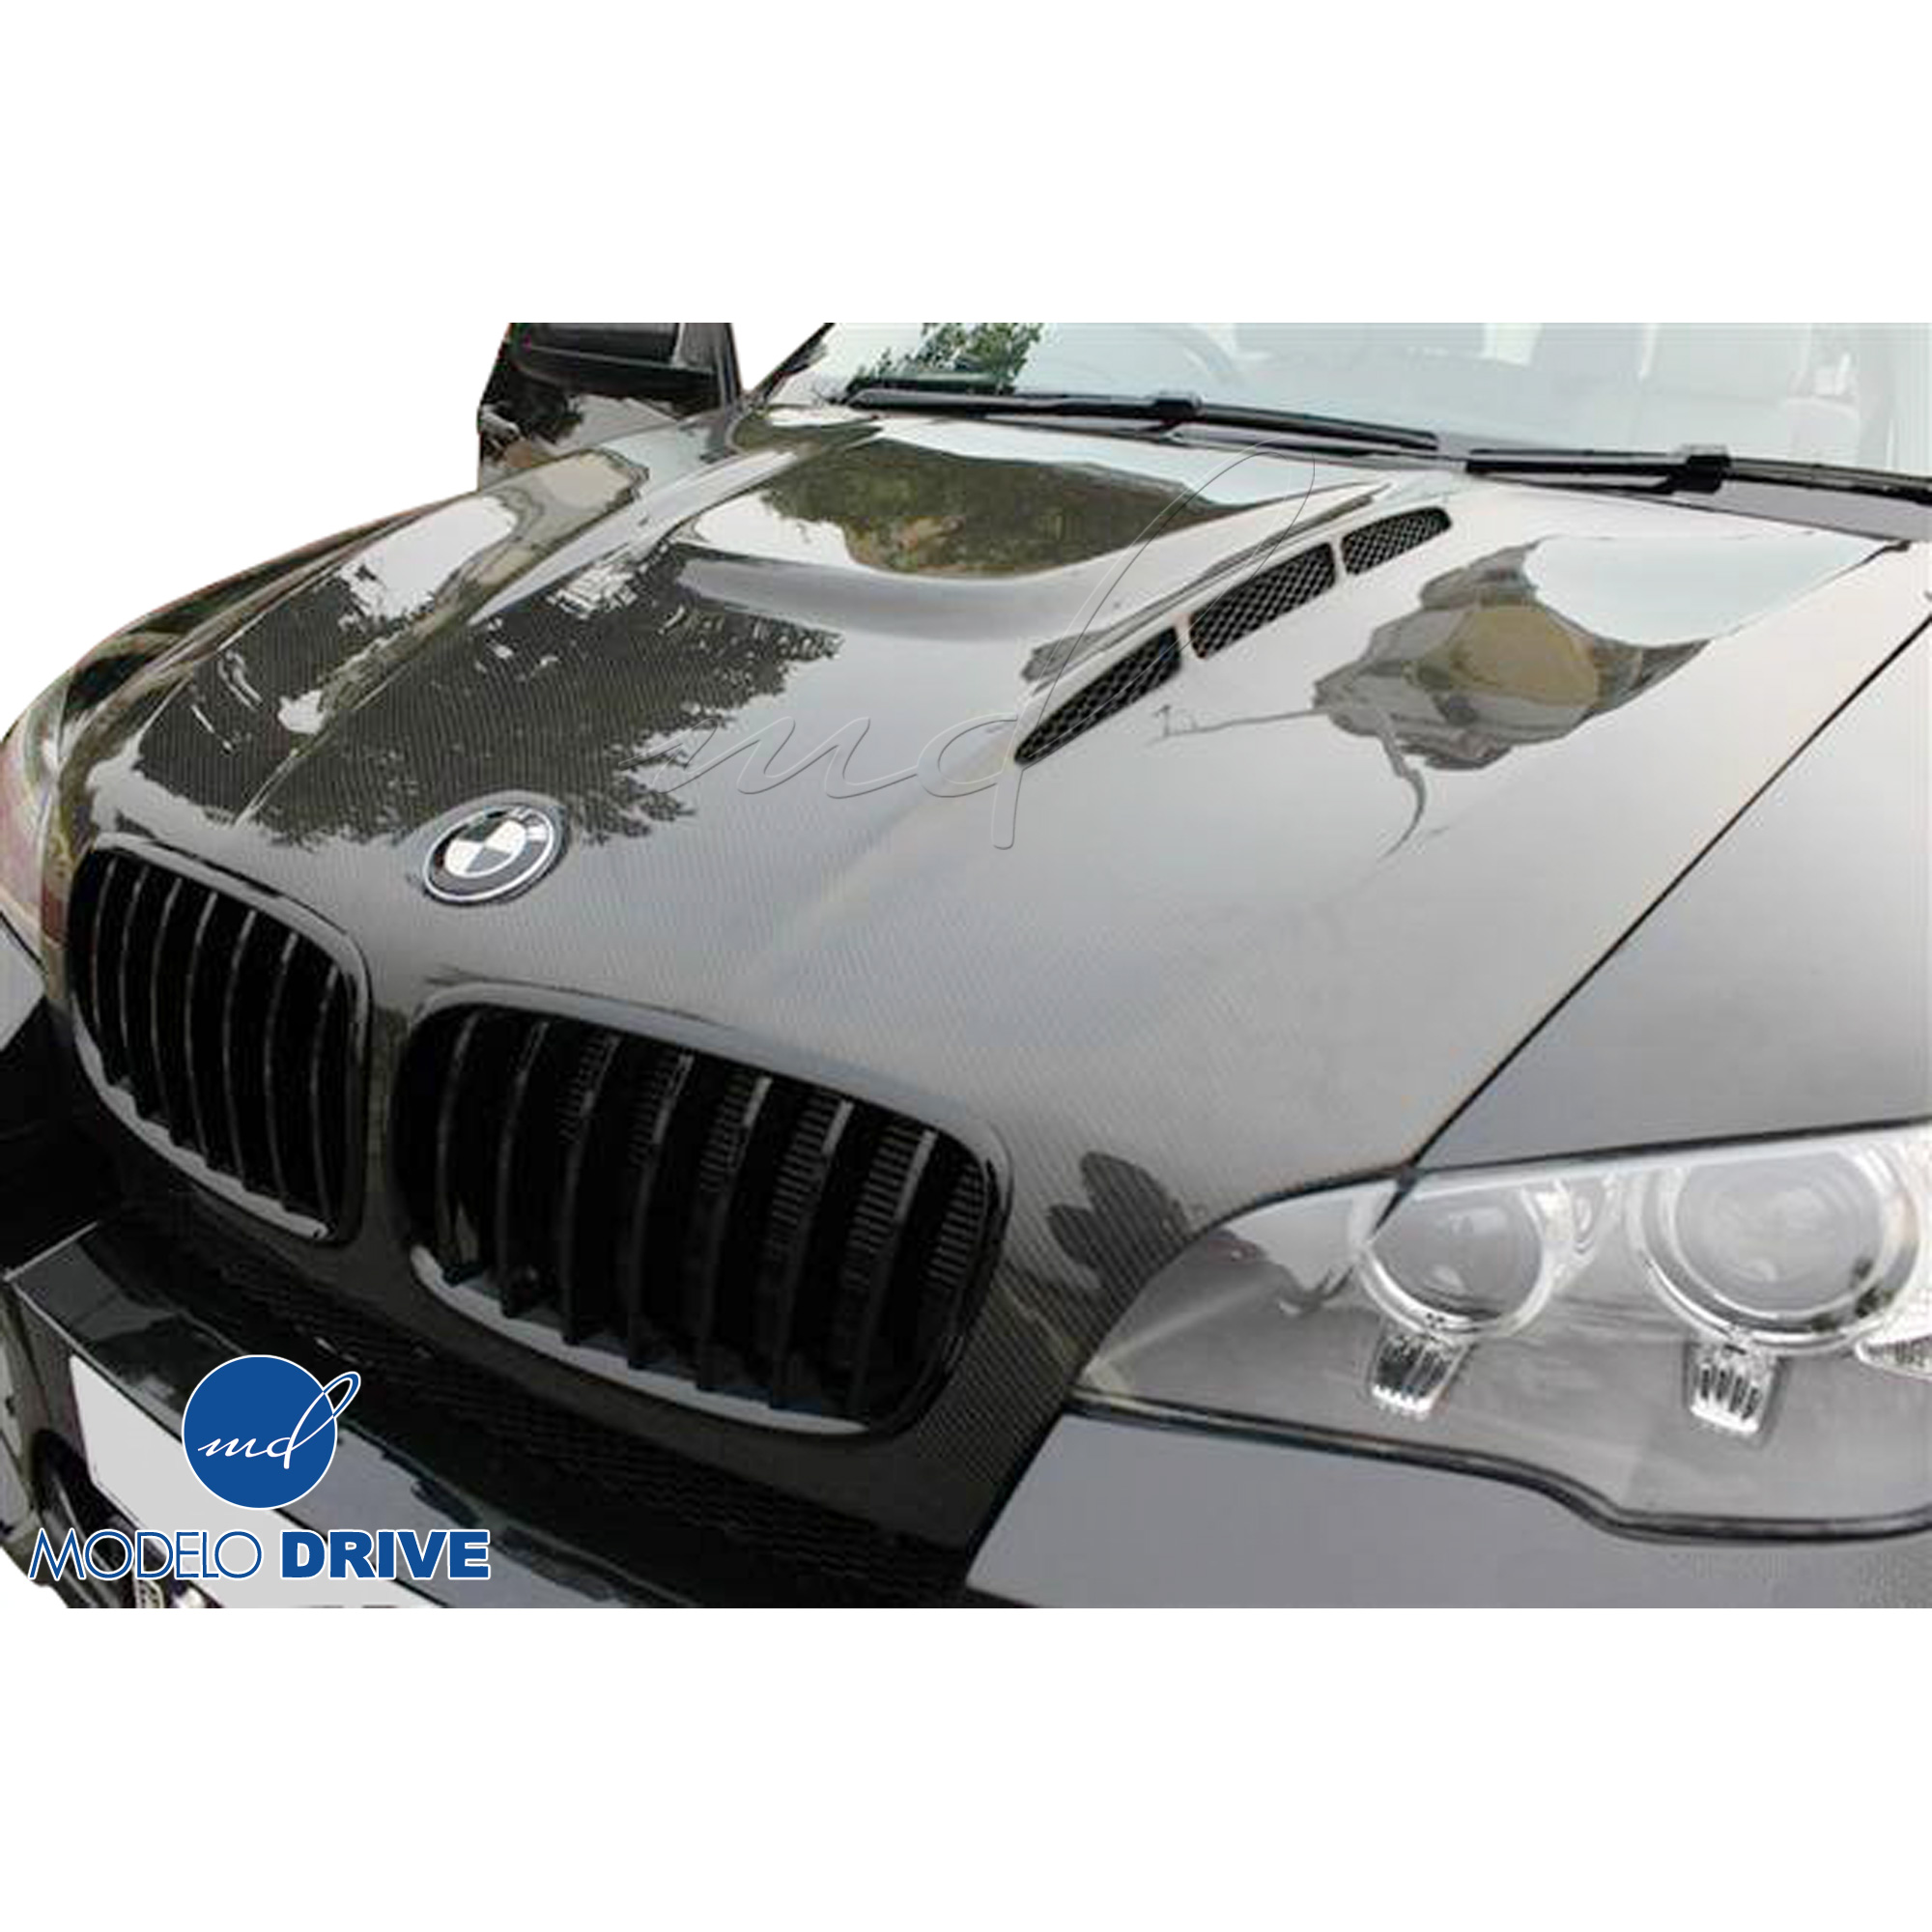 ModeloDrive Carbon Fiber HAMA Hood > BMW X6 E71 2008-2014 - Image 3